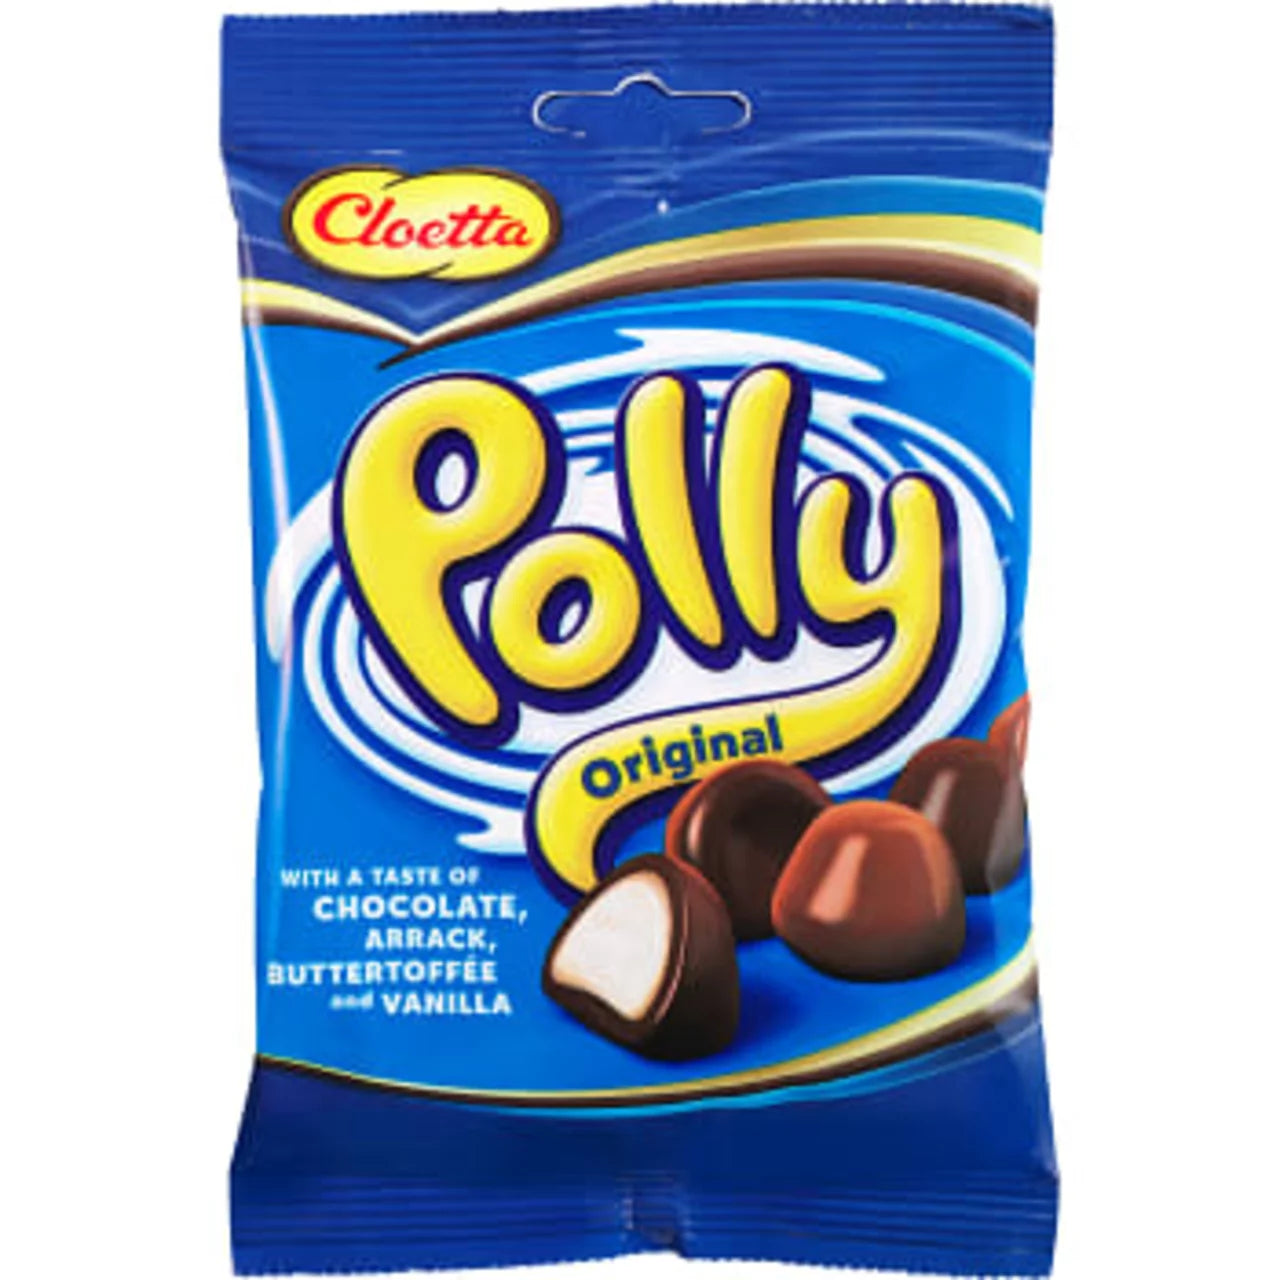 Polly Chocolade Snoepjes - Original